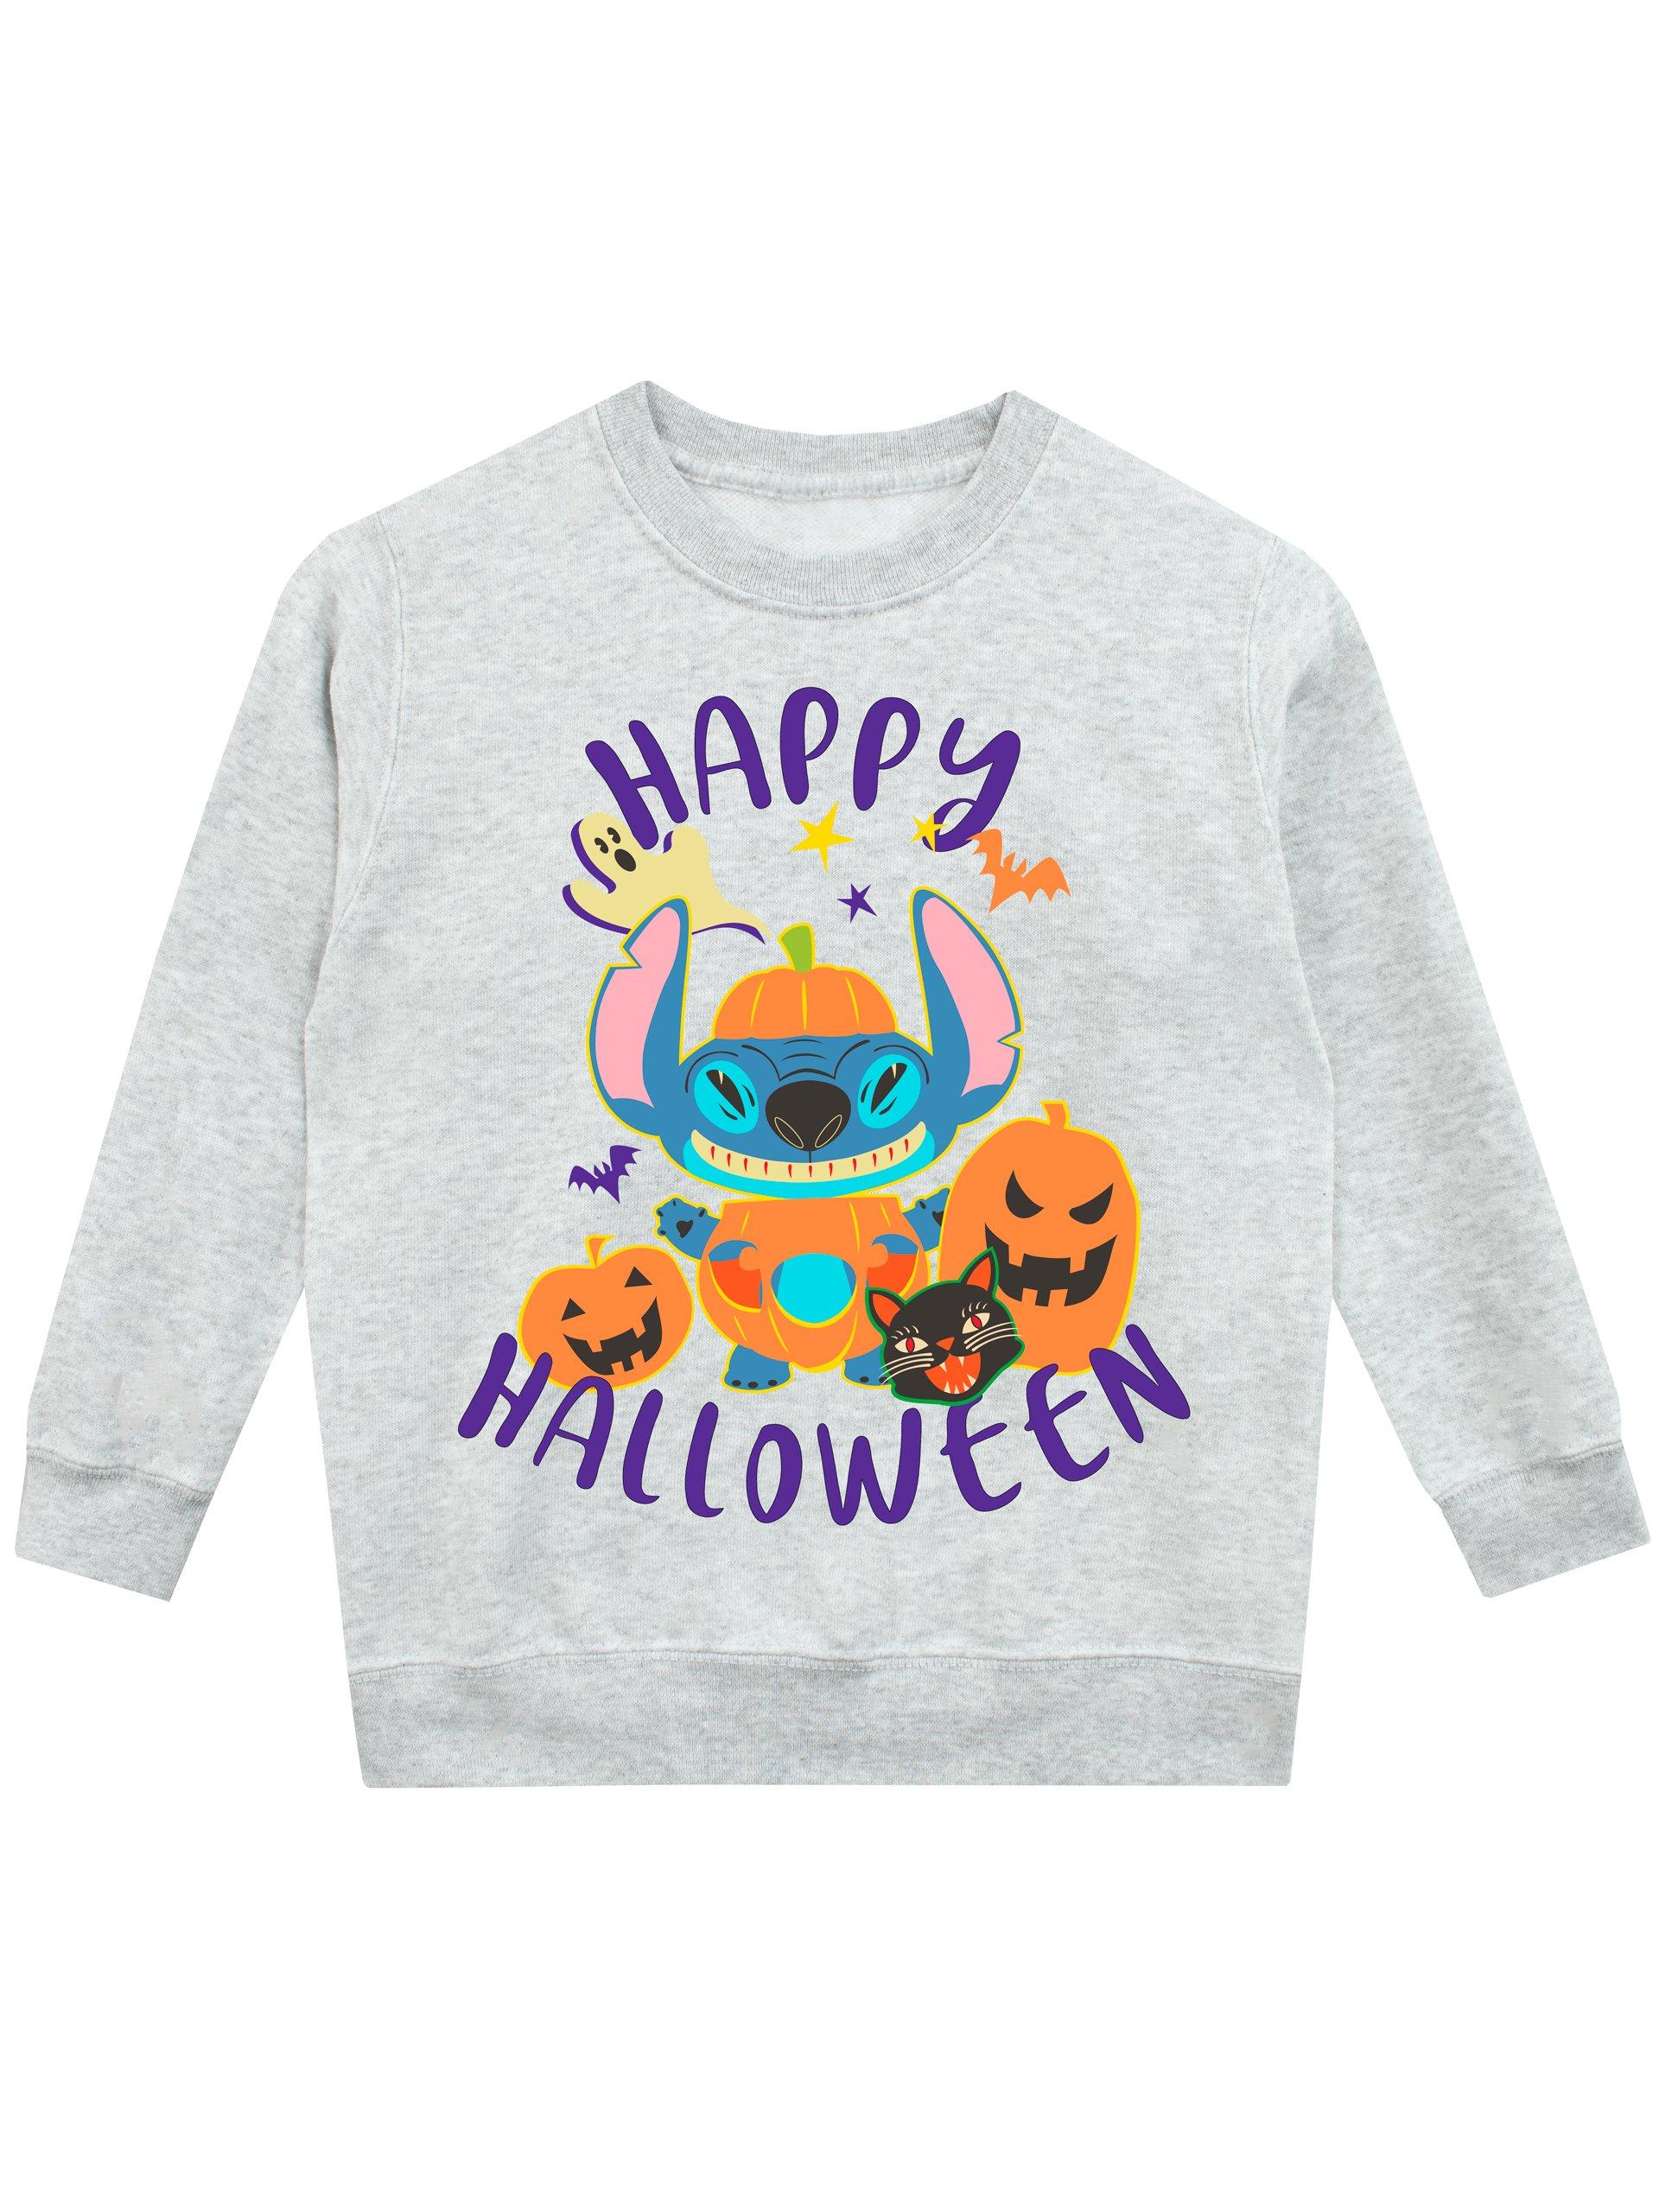 Lilo and Stitch Halloween Sweatshirt